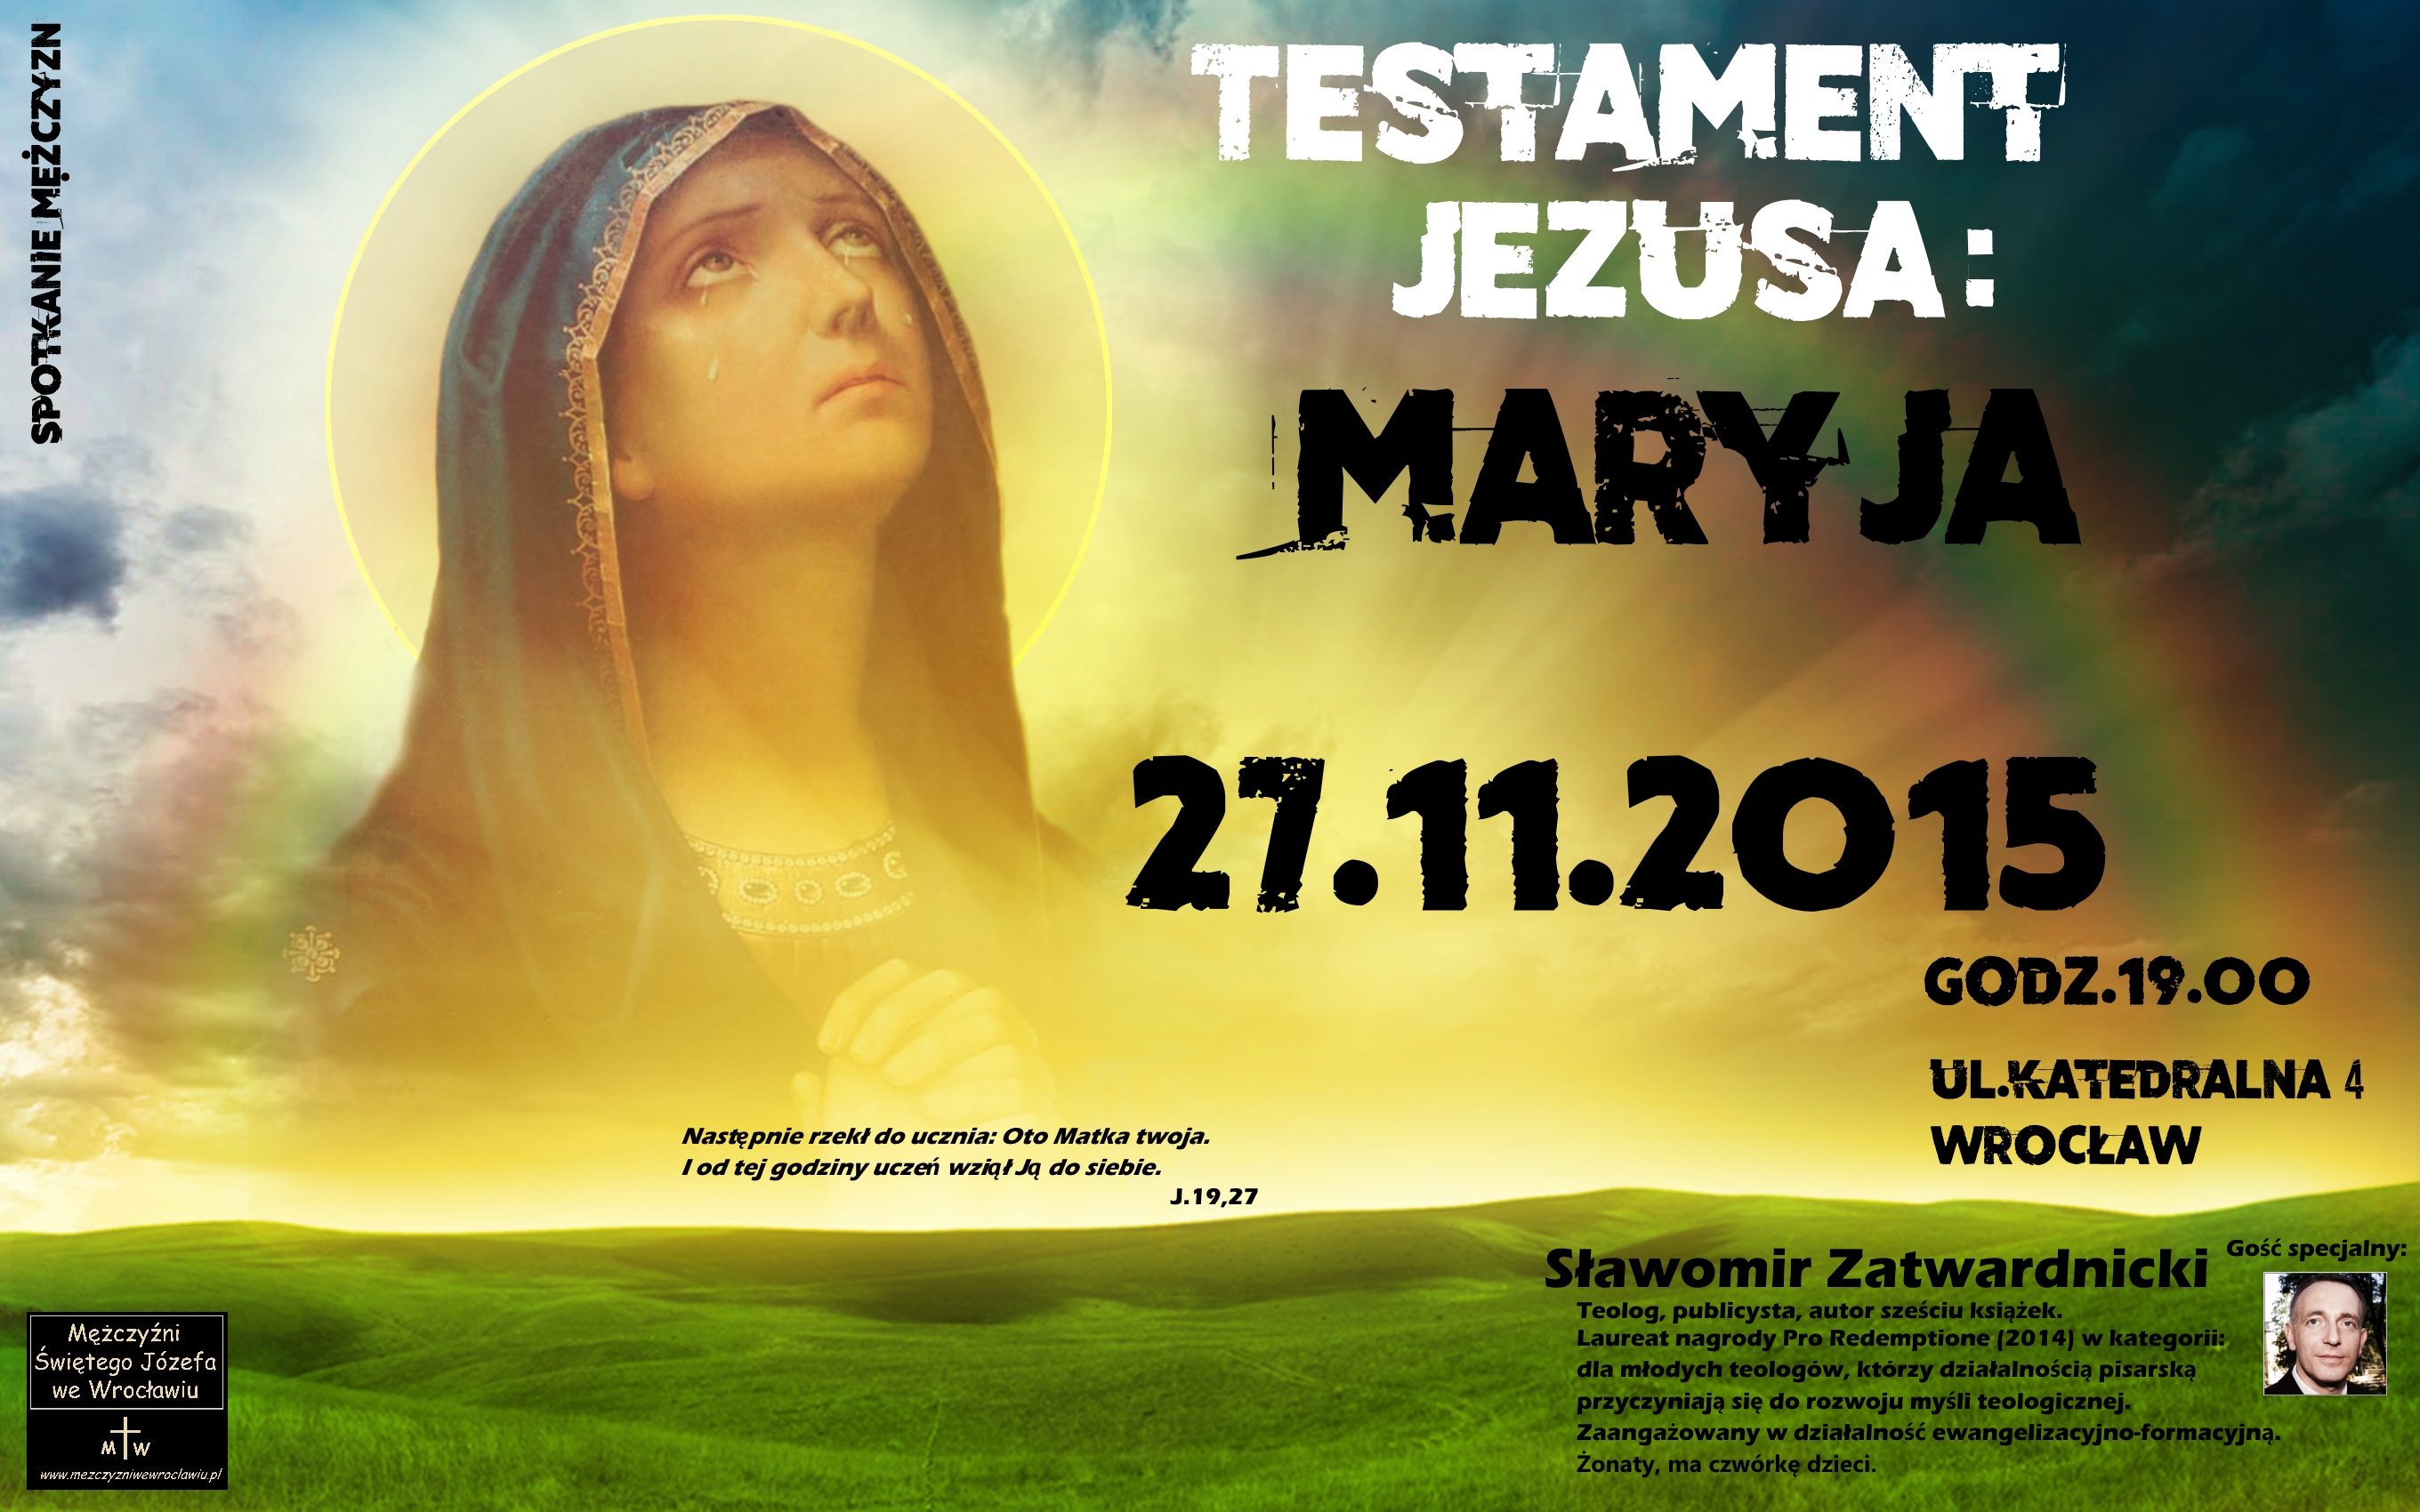 Testament Jezusa - Maryja - 27.11.2015